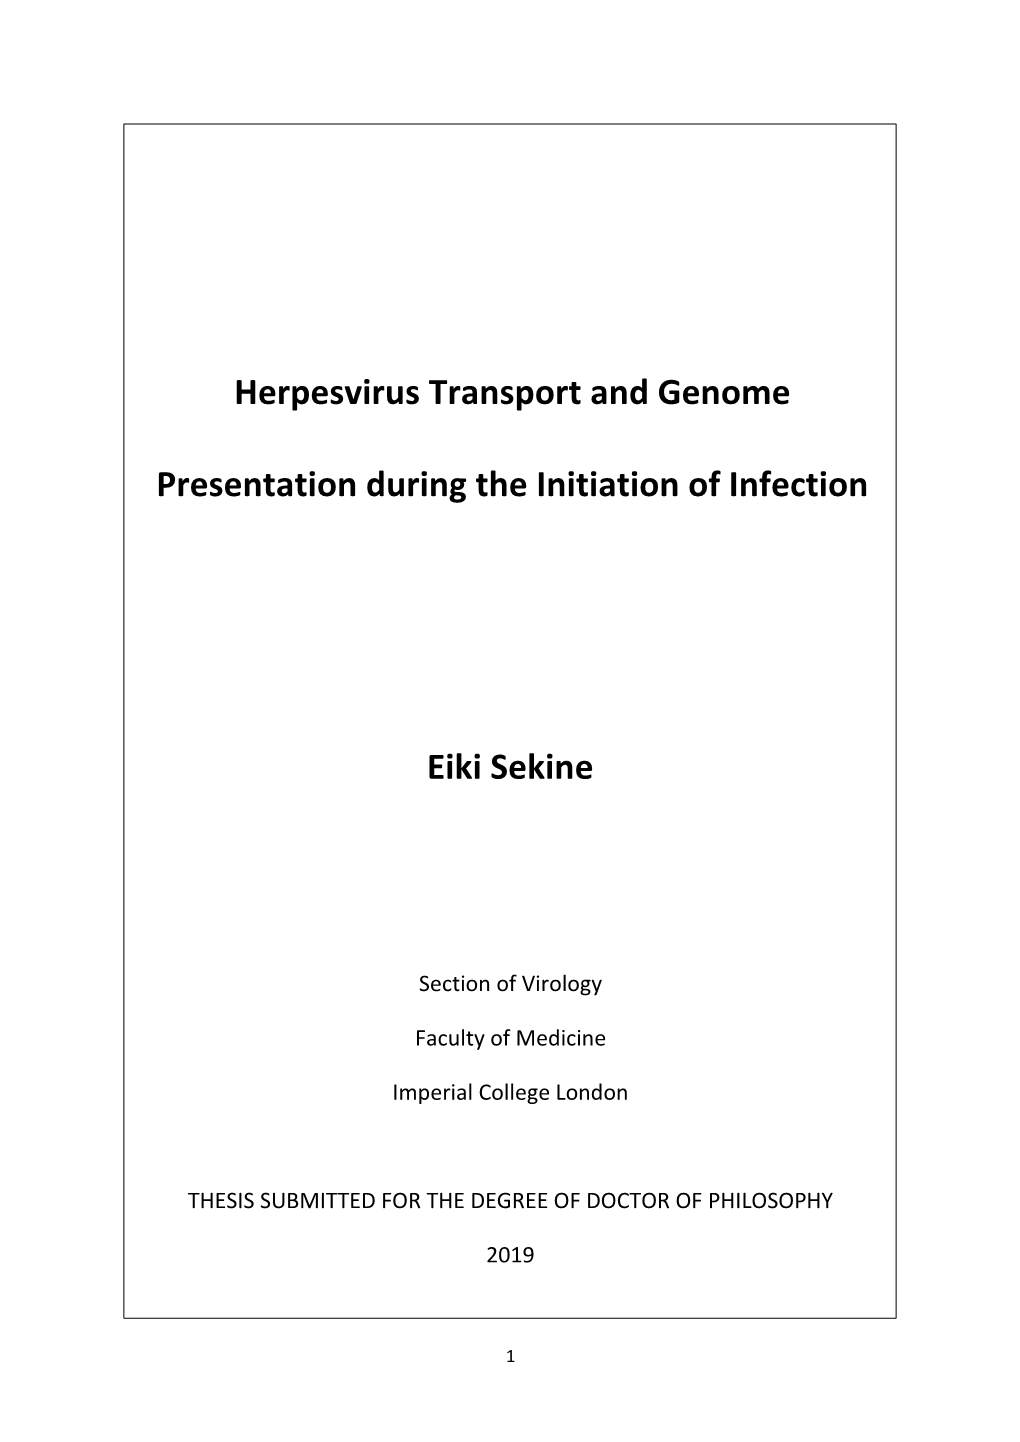 Eiki Sekine Herpesvirus Transport and Genome Presentation During The